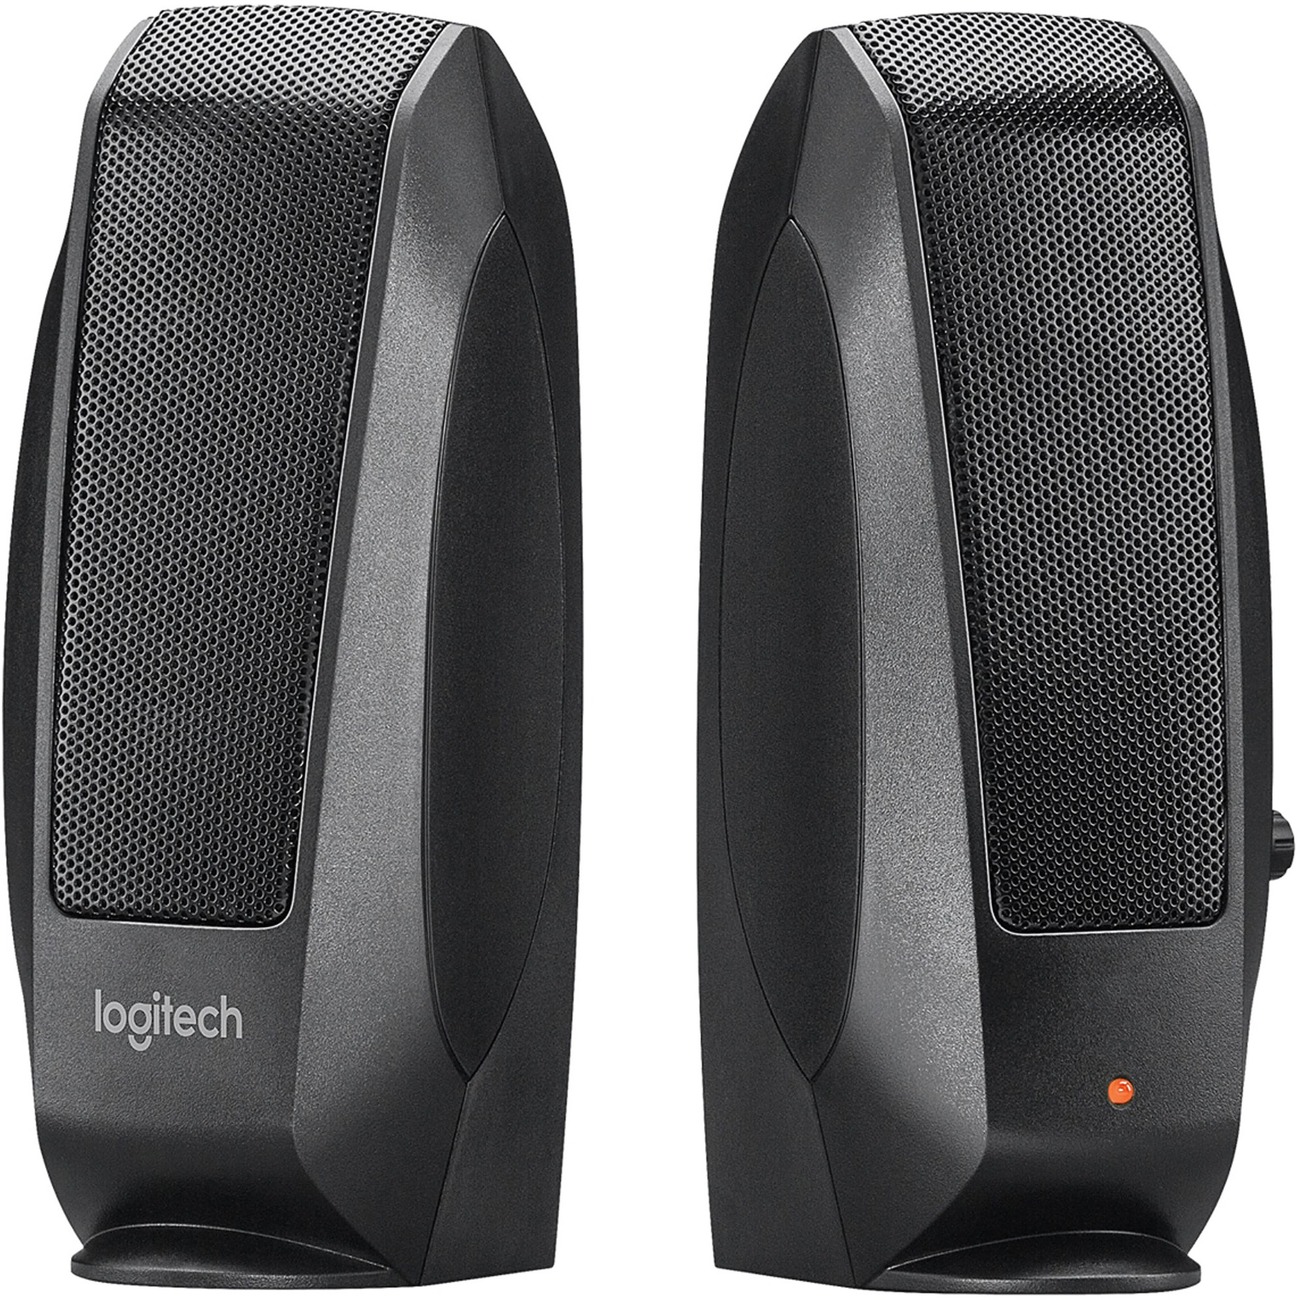 Forstad Åben samtale Logitech S-120 2.0 Speaker System - 2.30 W RMS - Black